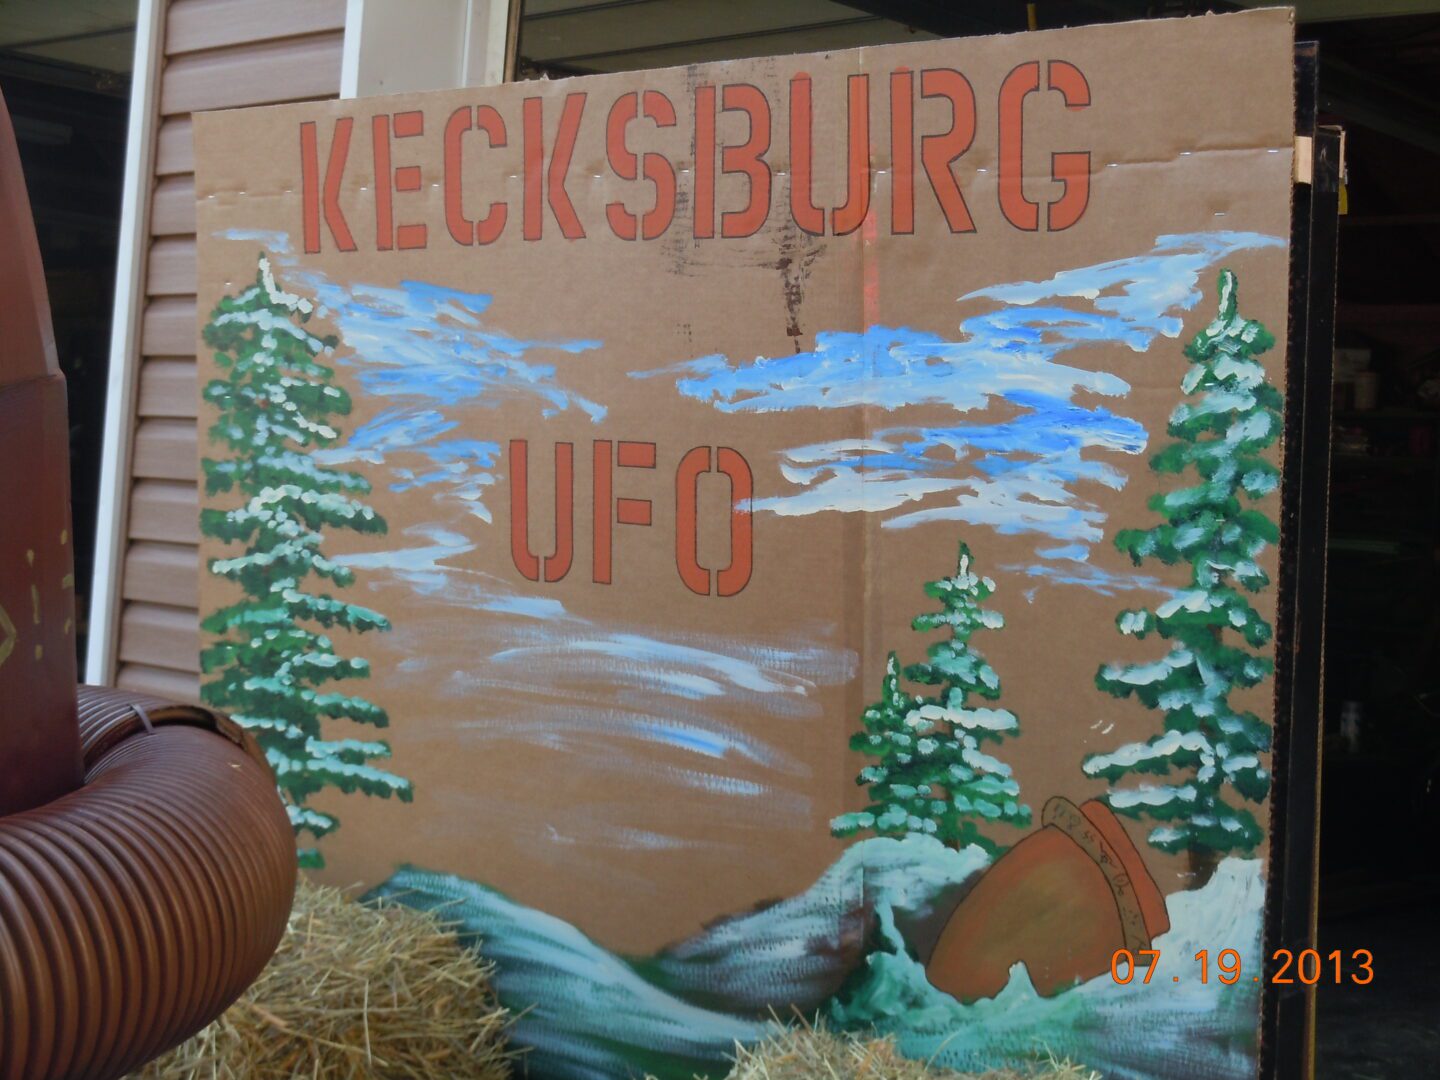 A sign for the kecksburg ufo club